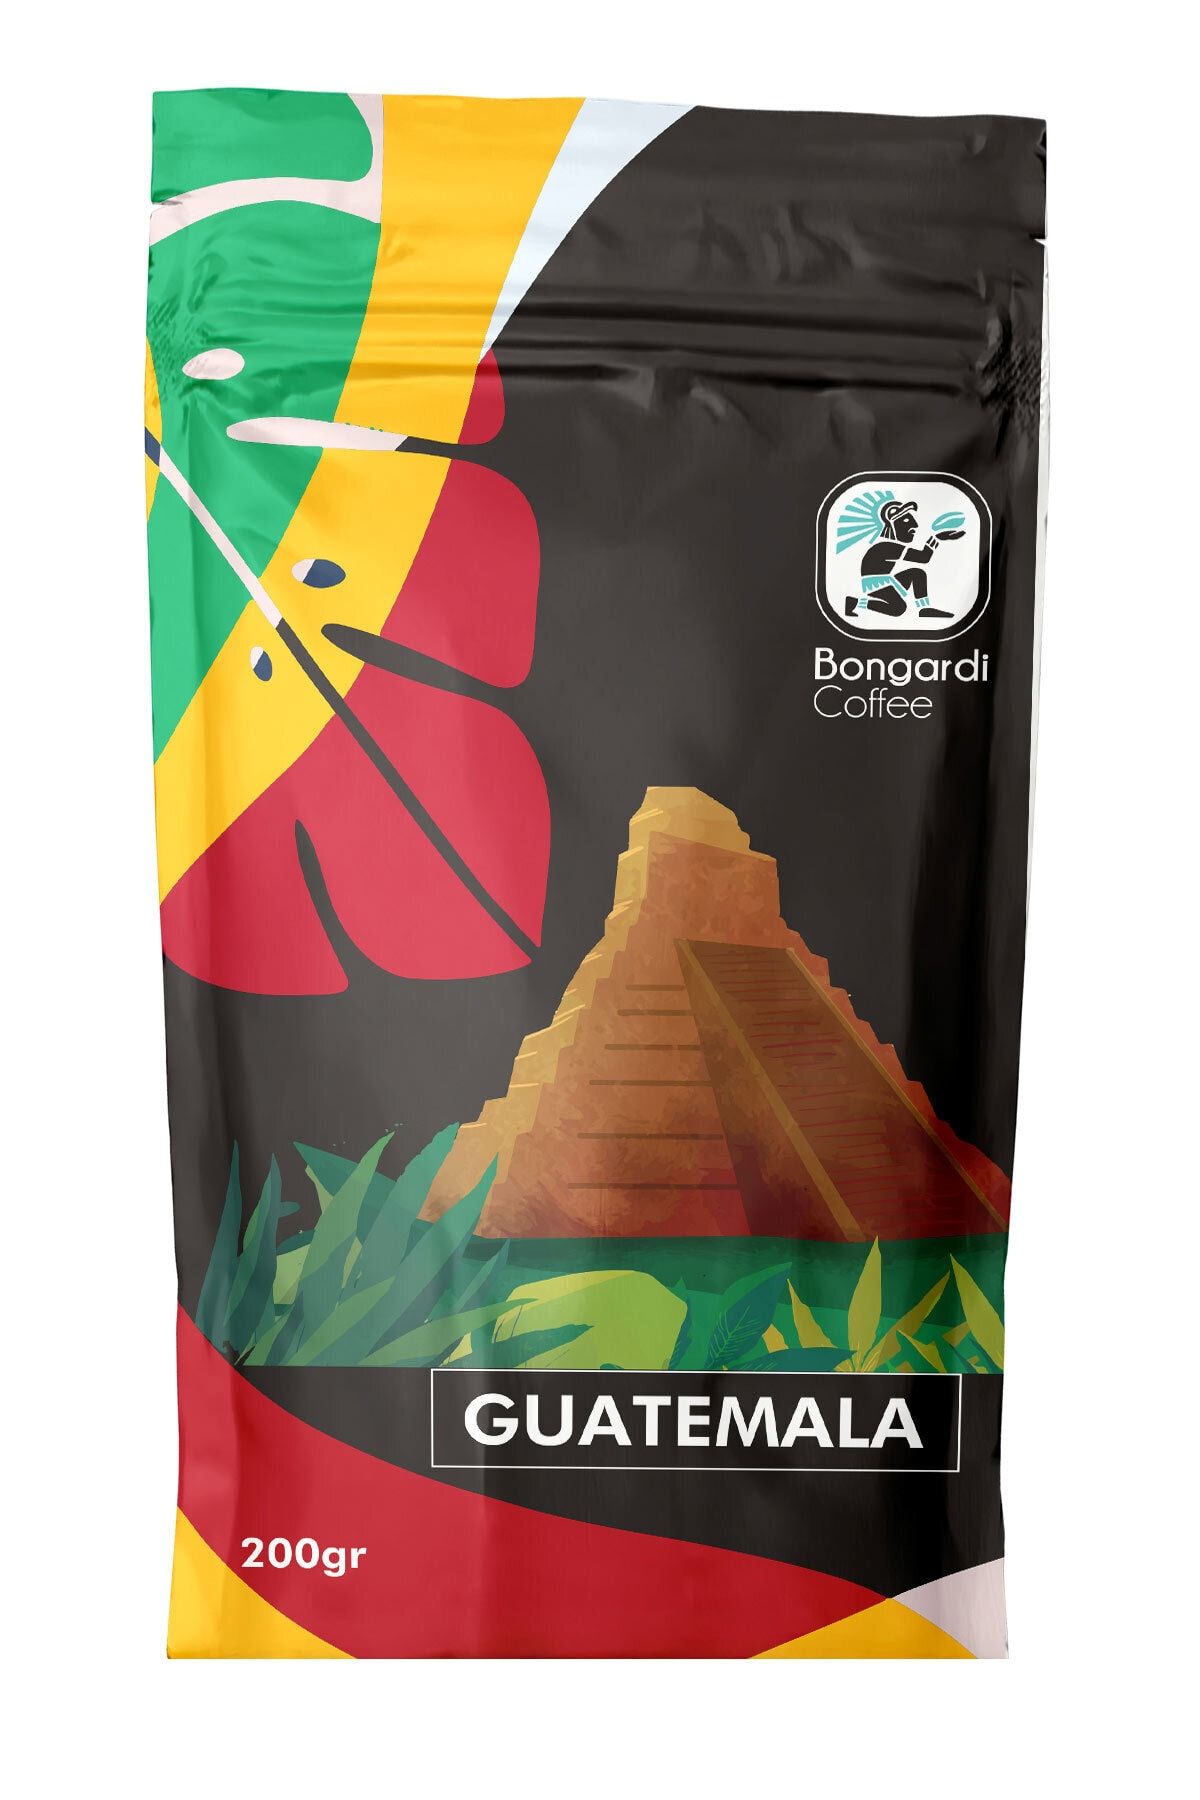 Bongardi Coffee Guatemala Yöresel Filtre Kahve Makinesi Uyumlu 200 G